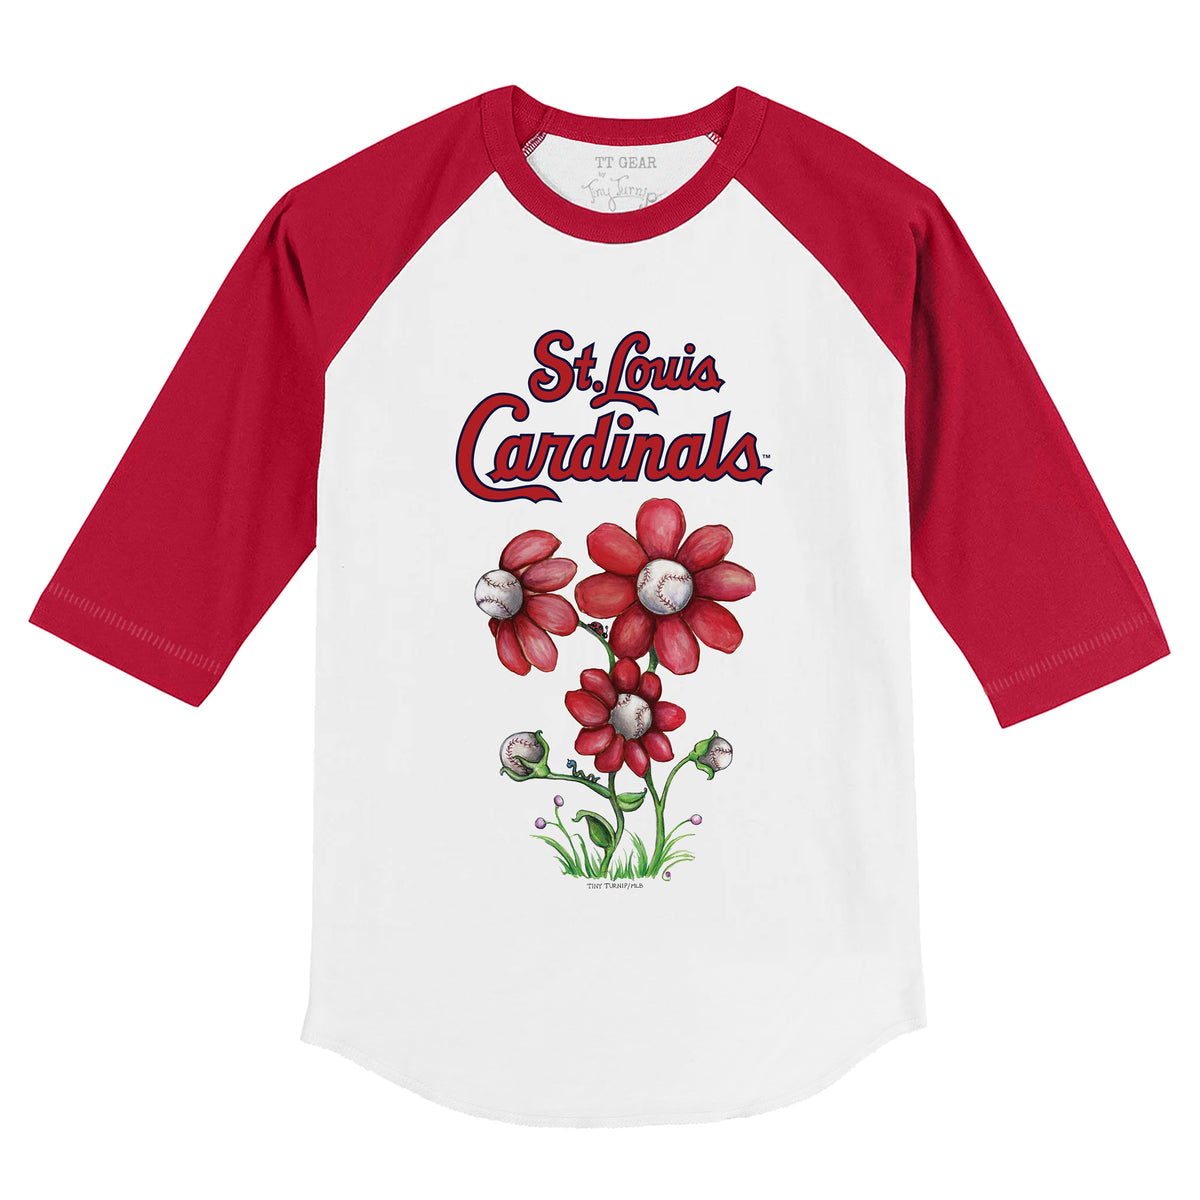 St. Louis Cardinals Blooming Baseballs 3/4 Red Sleeve Raglan